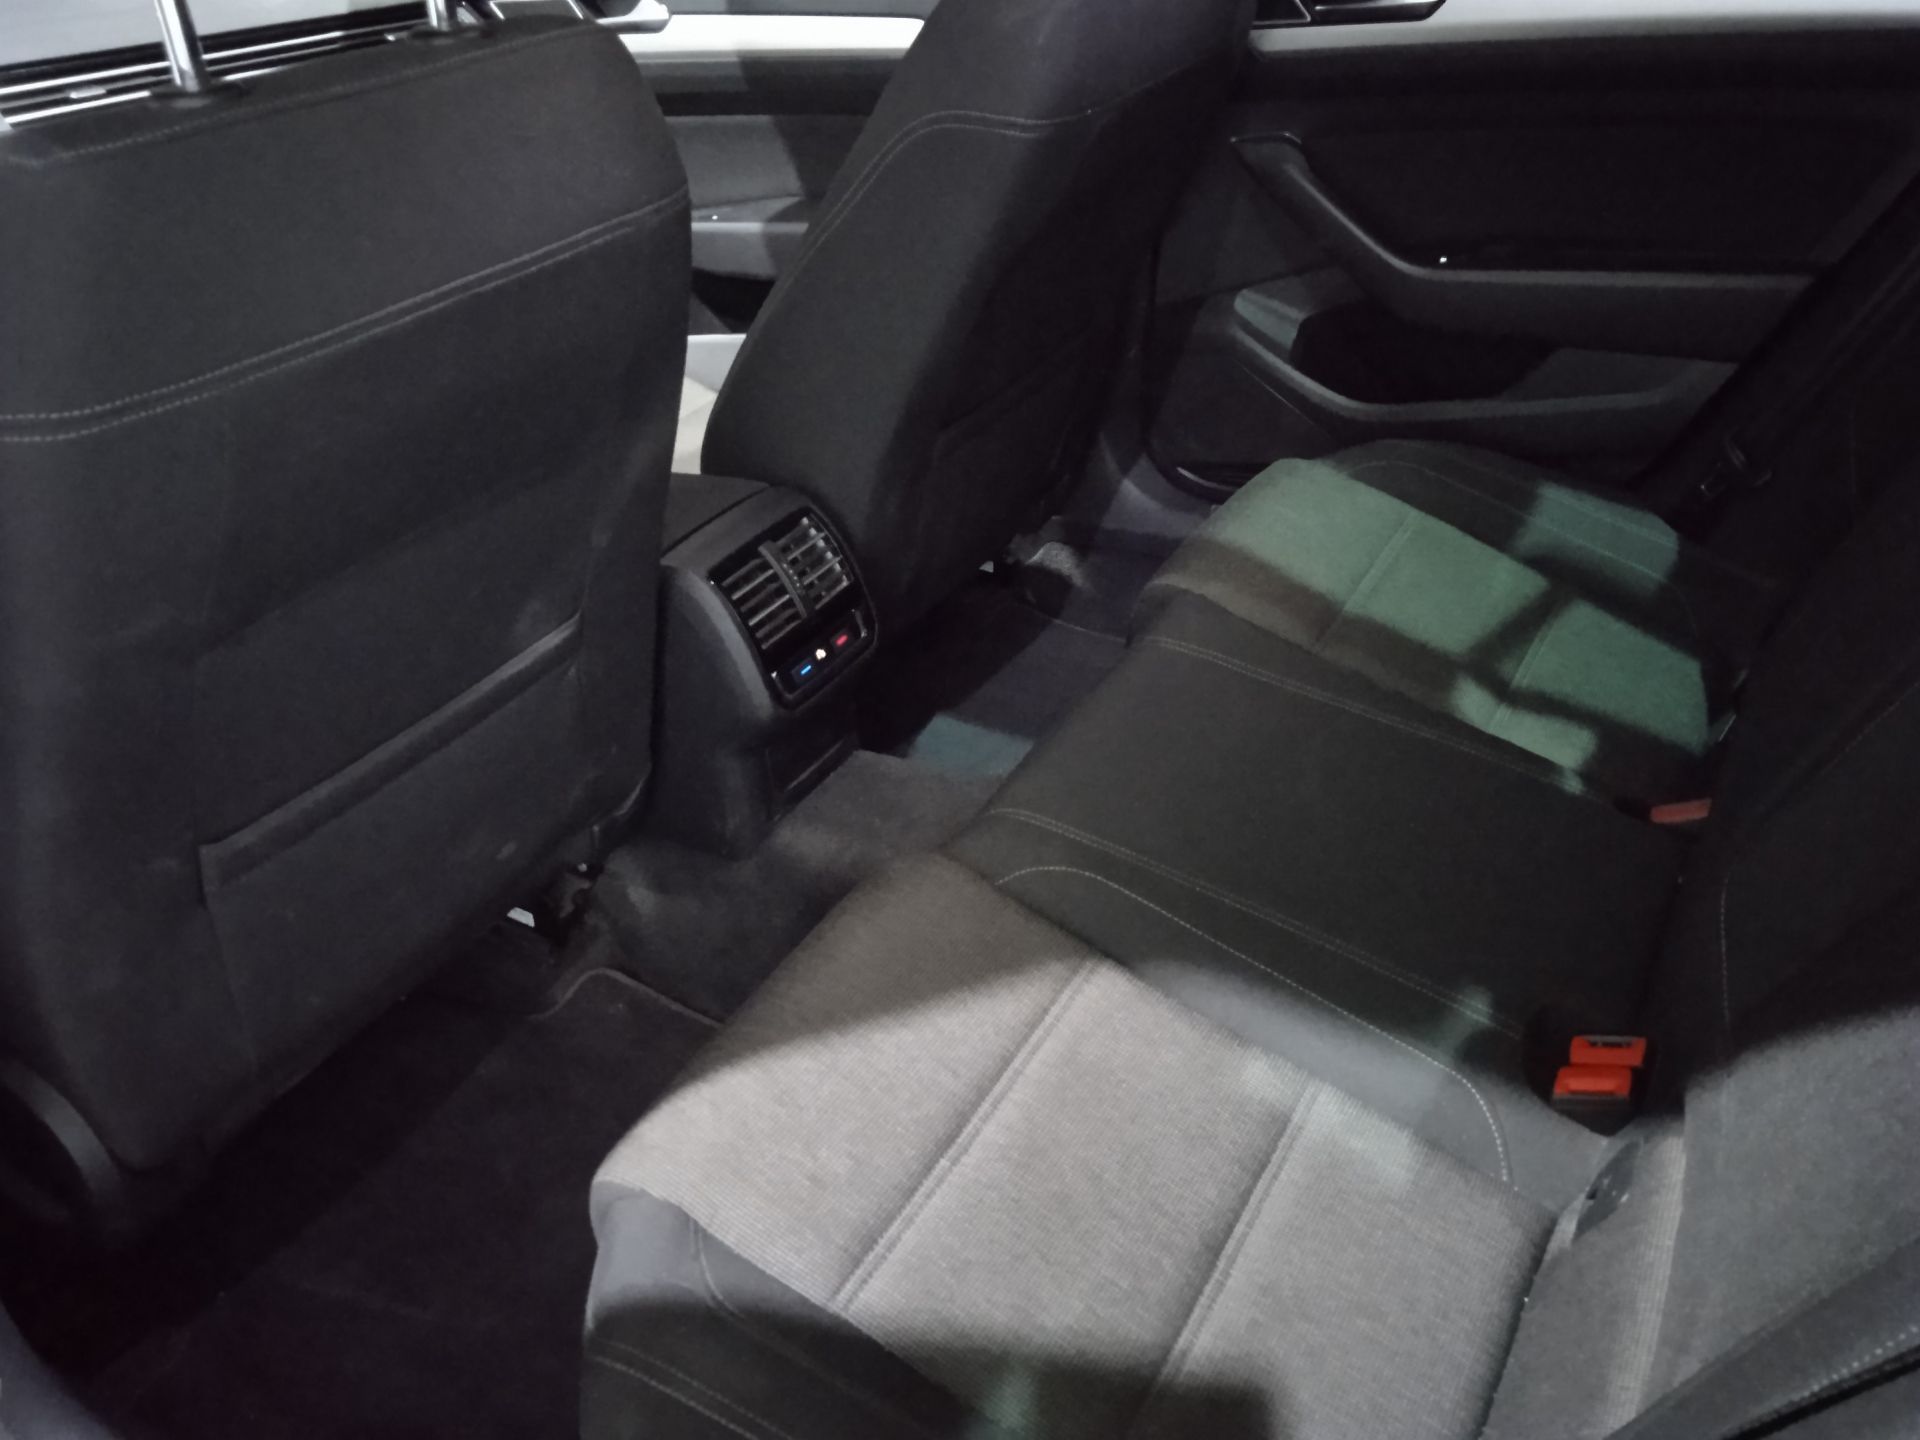 Volkswagen Passat Advance 2.0 TDI 110kW(150CV) BMT